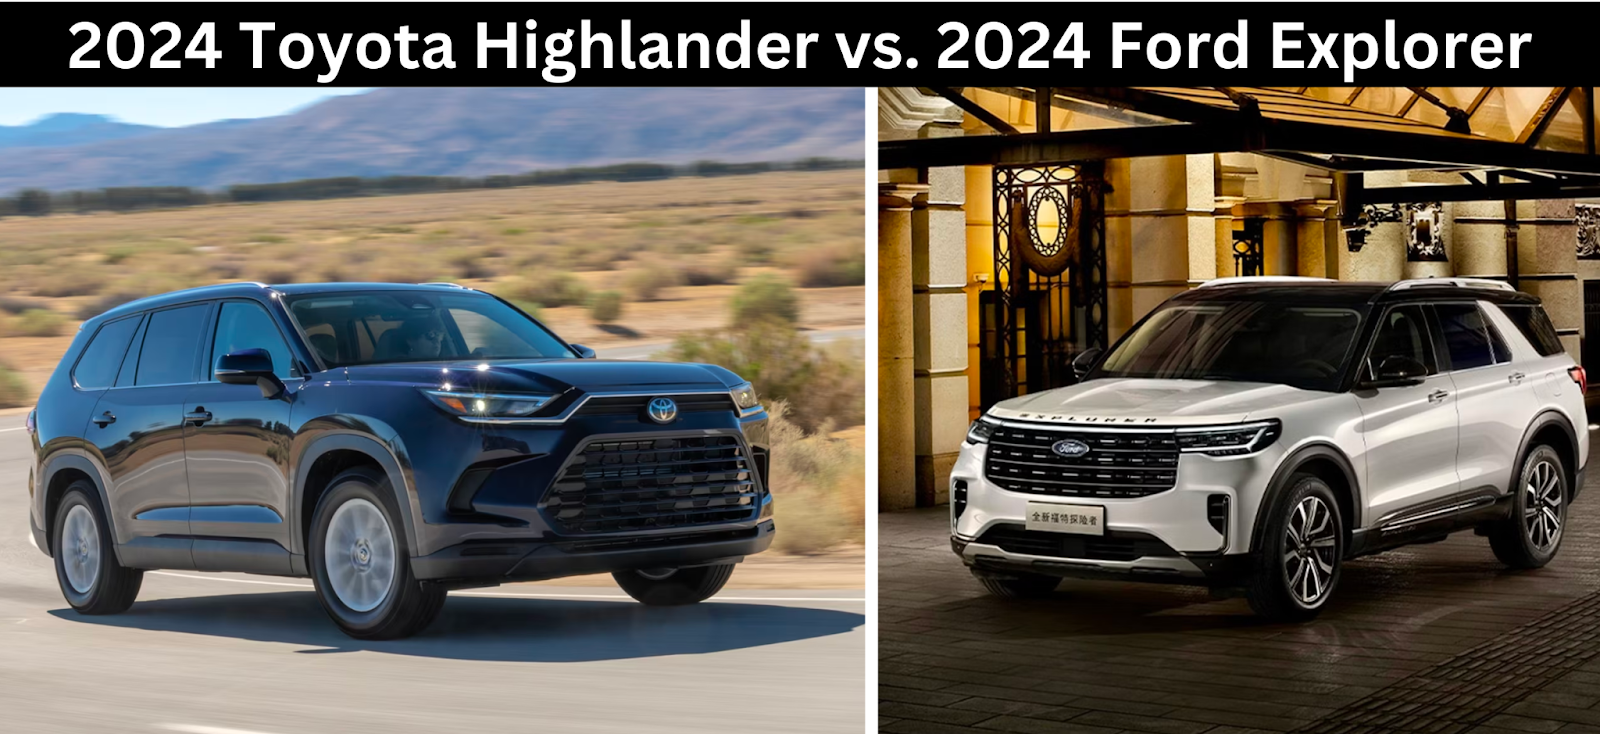 2024 Toyota Highlander vs 2024 Ford Explorer